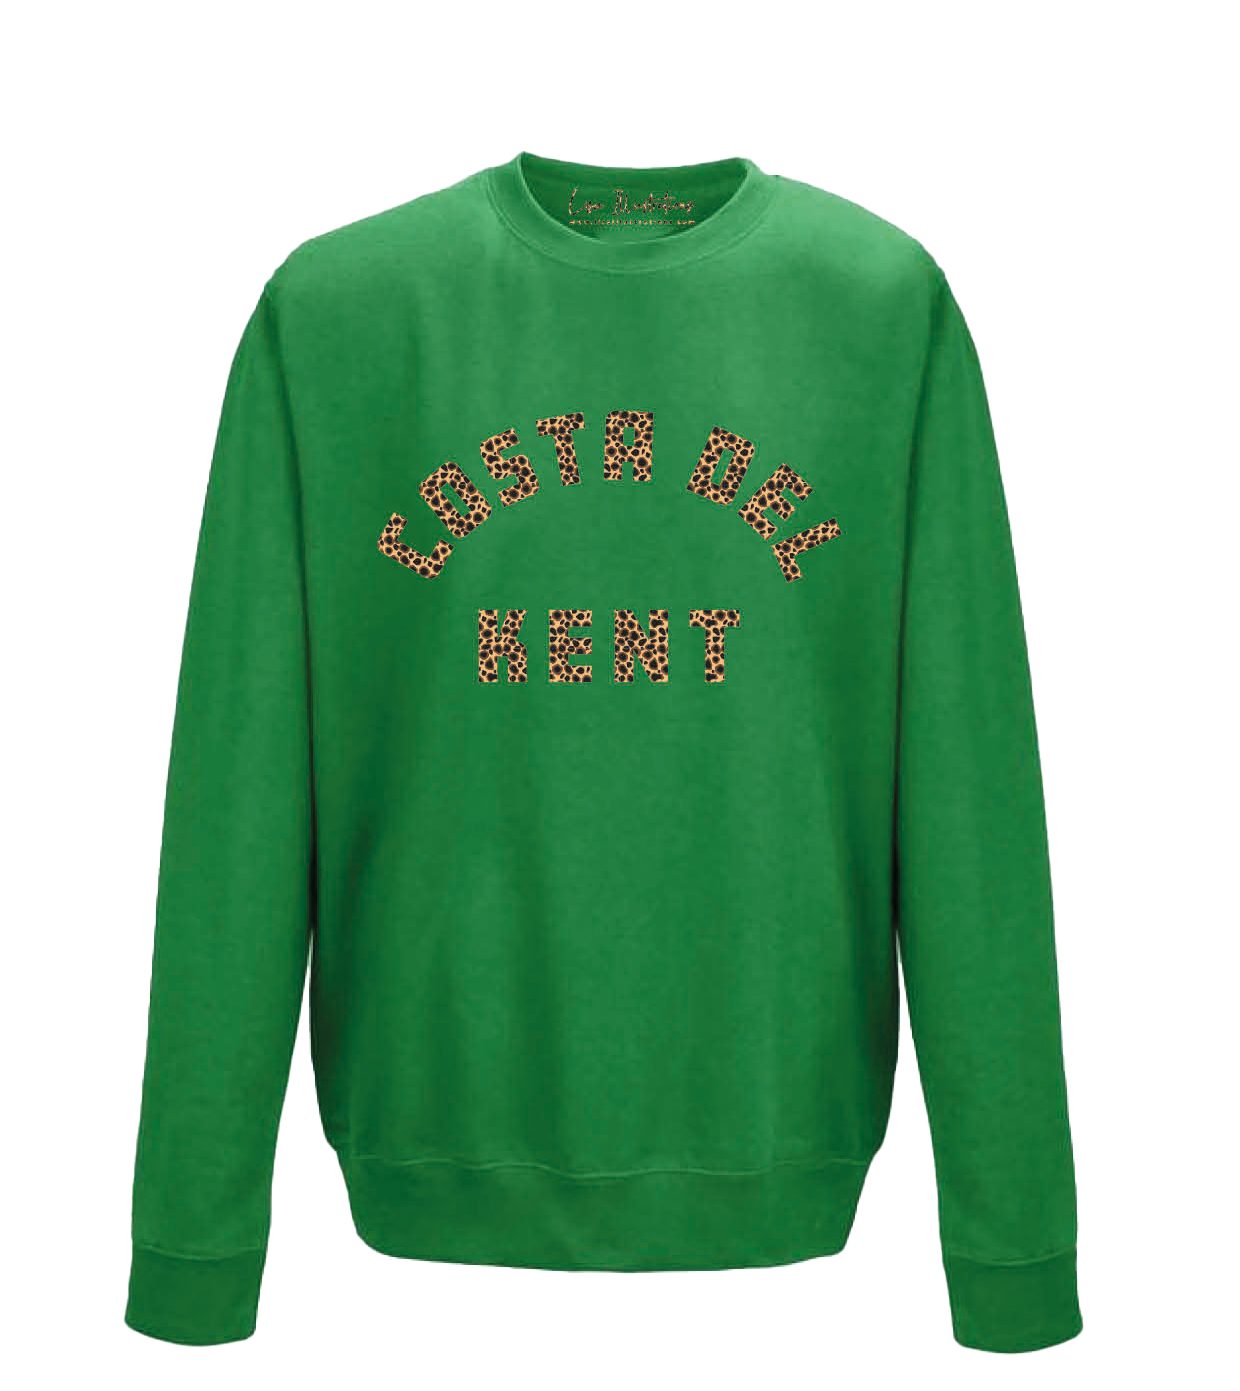 ‘Costa Del Kent’ Adults Unisex Sweatshirt - Green